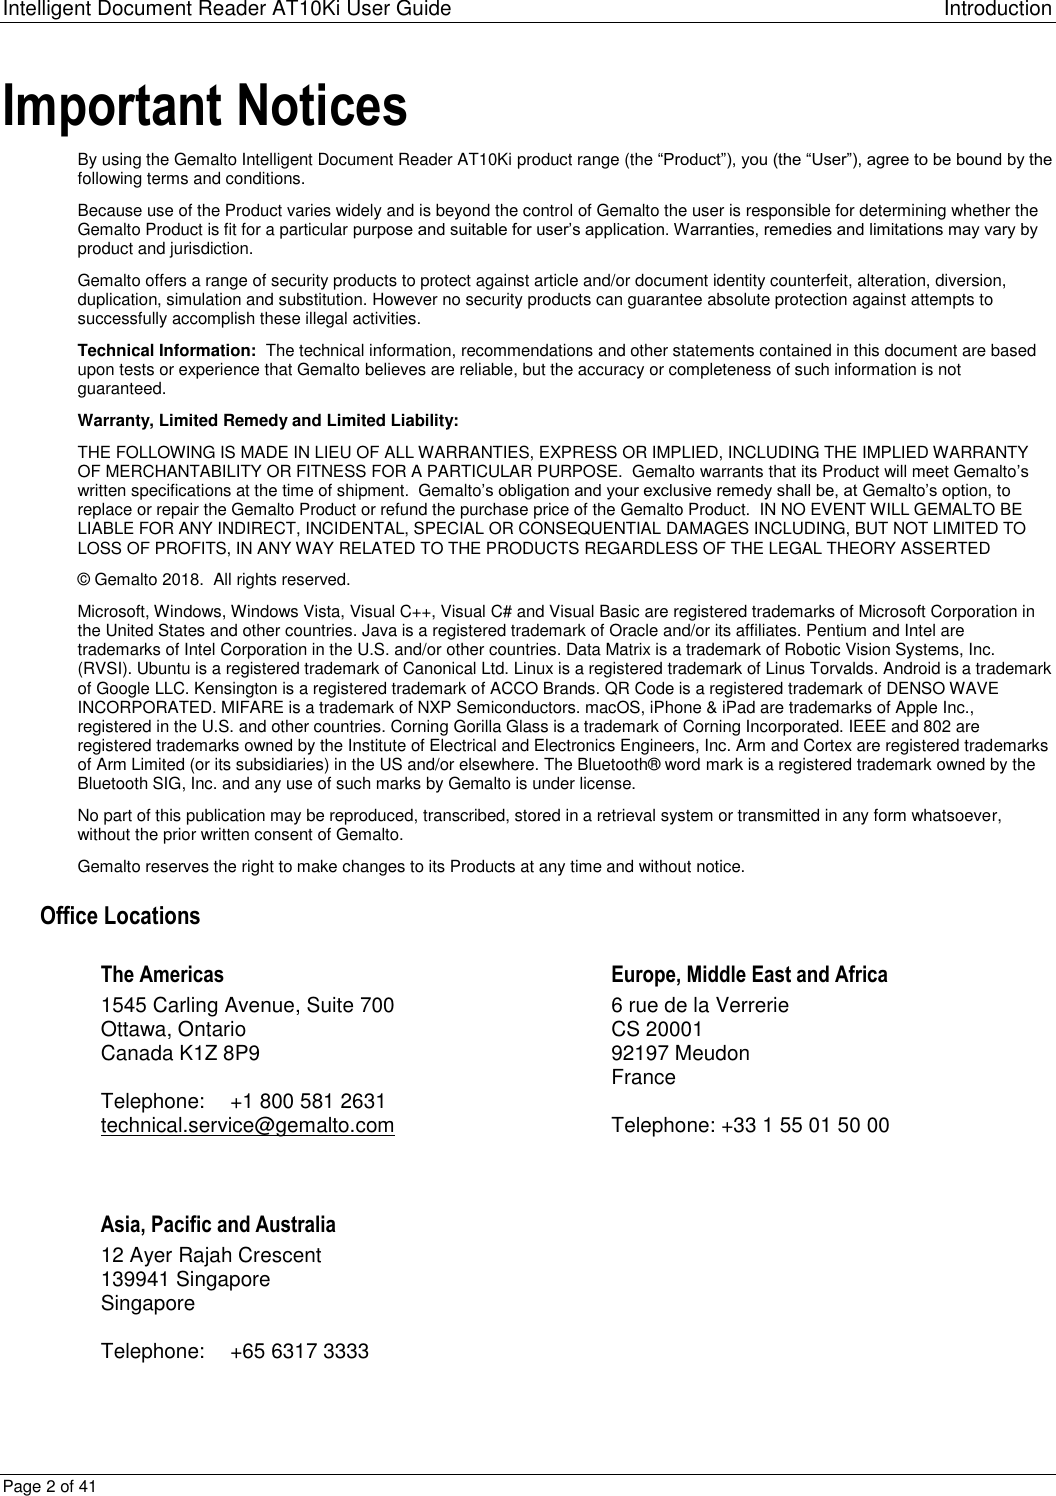 Page 2 of Thales DIS USA PR01523 ation Scanner User Manual